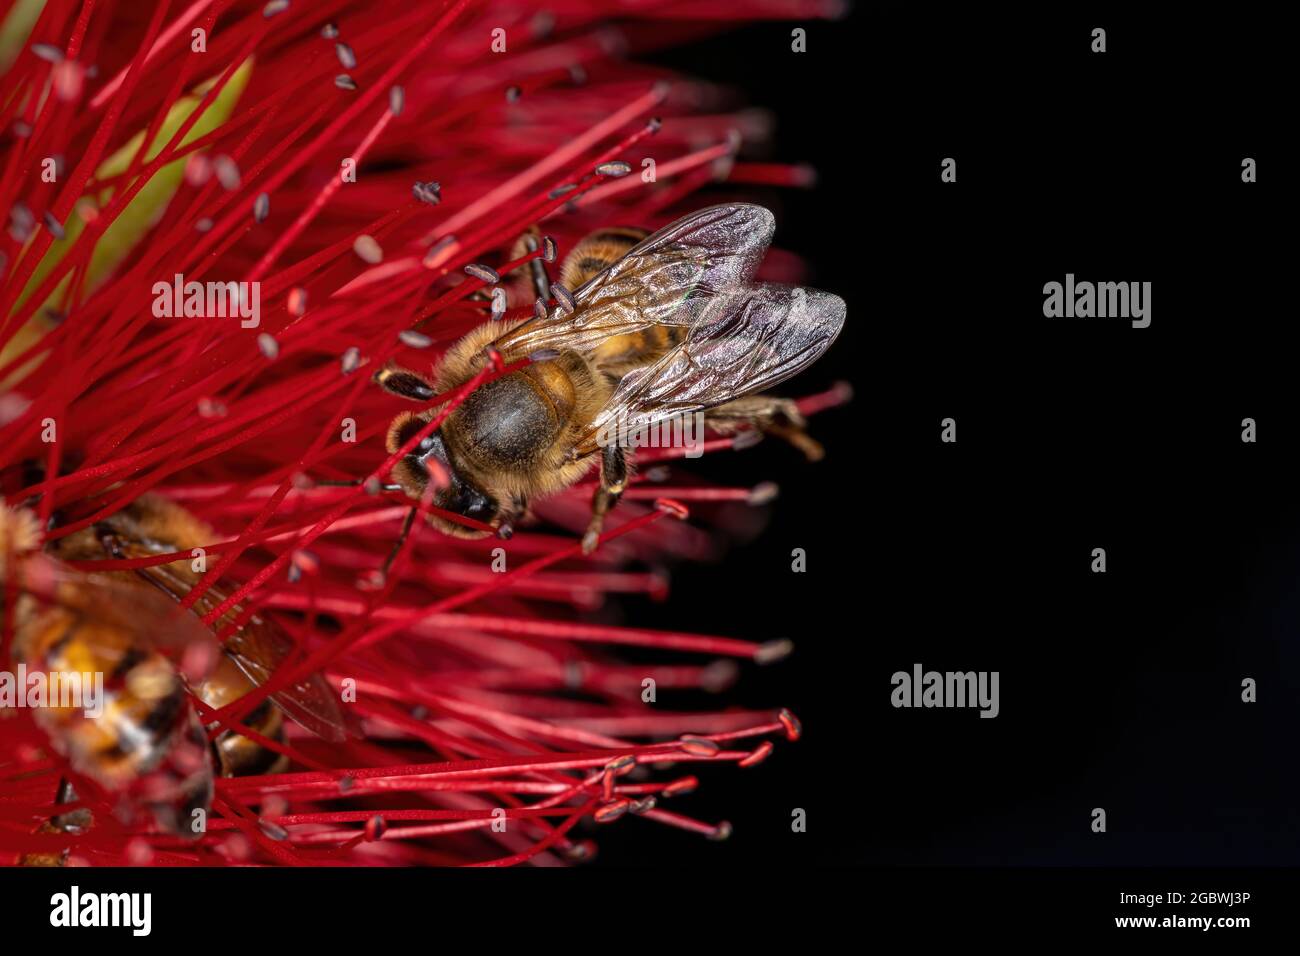 Adult Western Honey Bee of the species Apis mellifera pollinating bottle brush flowers Stock Photo